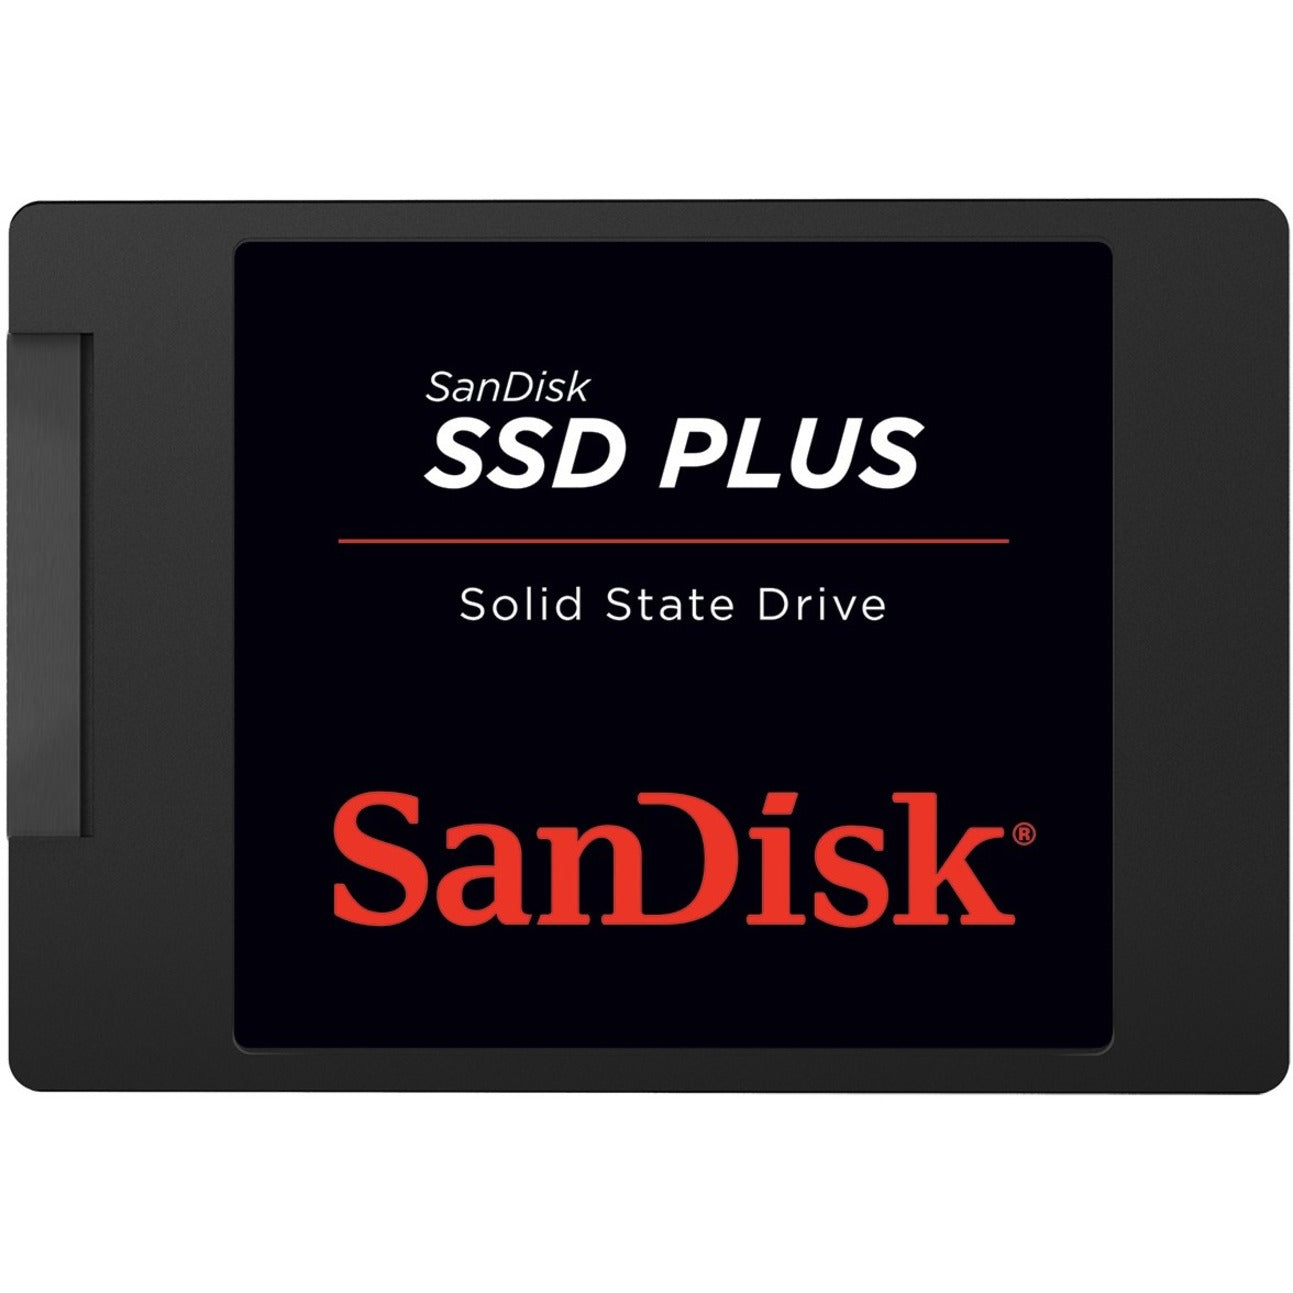 SanDisk SDSSDA-1T00-G26 SSD PLUS 1TB Solid State Drive, High-Speed Storage Solution